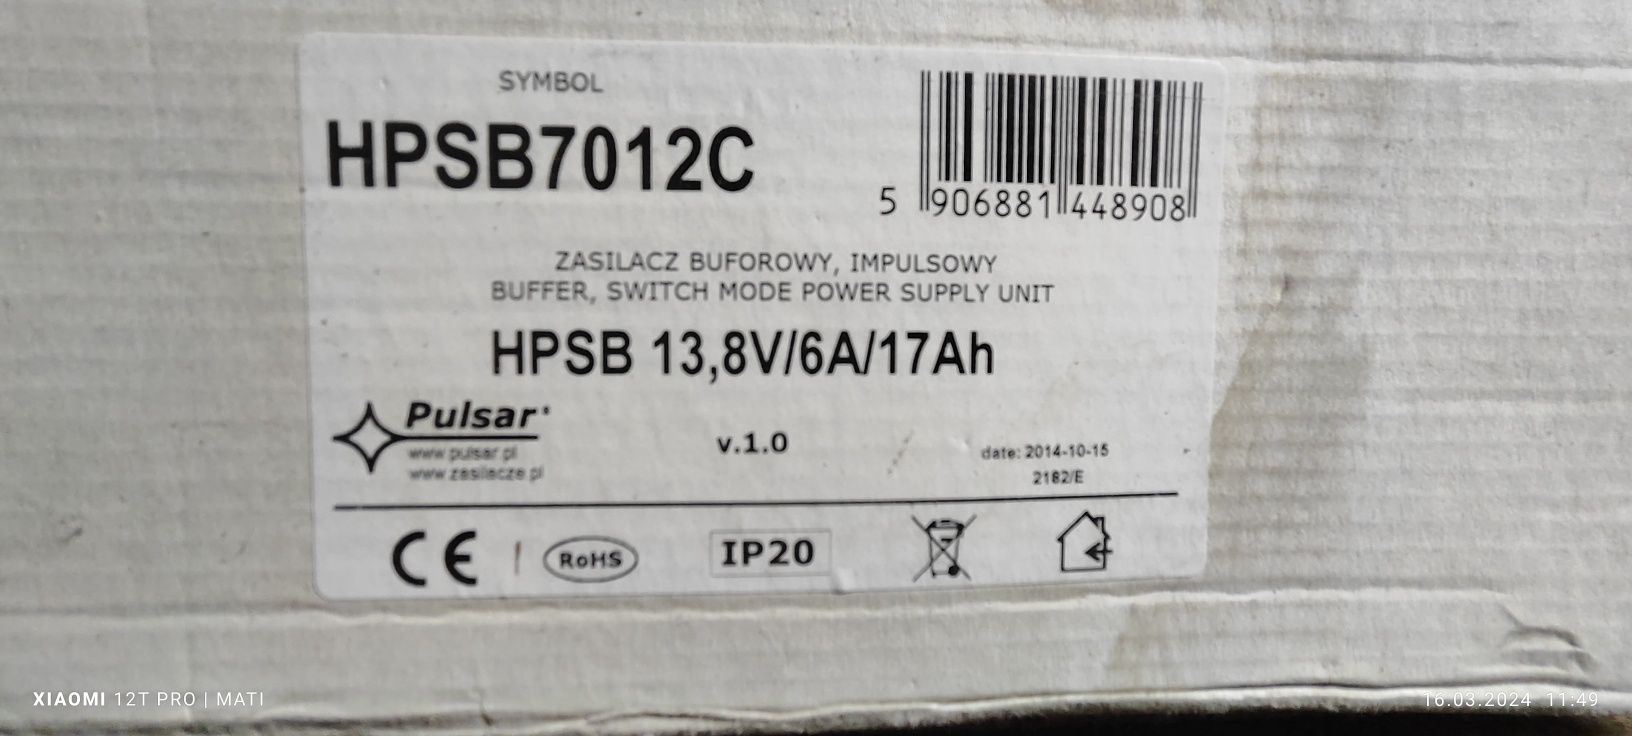 Pulsar Hpsb7012C Zasilacz Buforowy 13,8V/6A/17Ah )
Specyfika